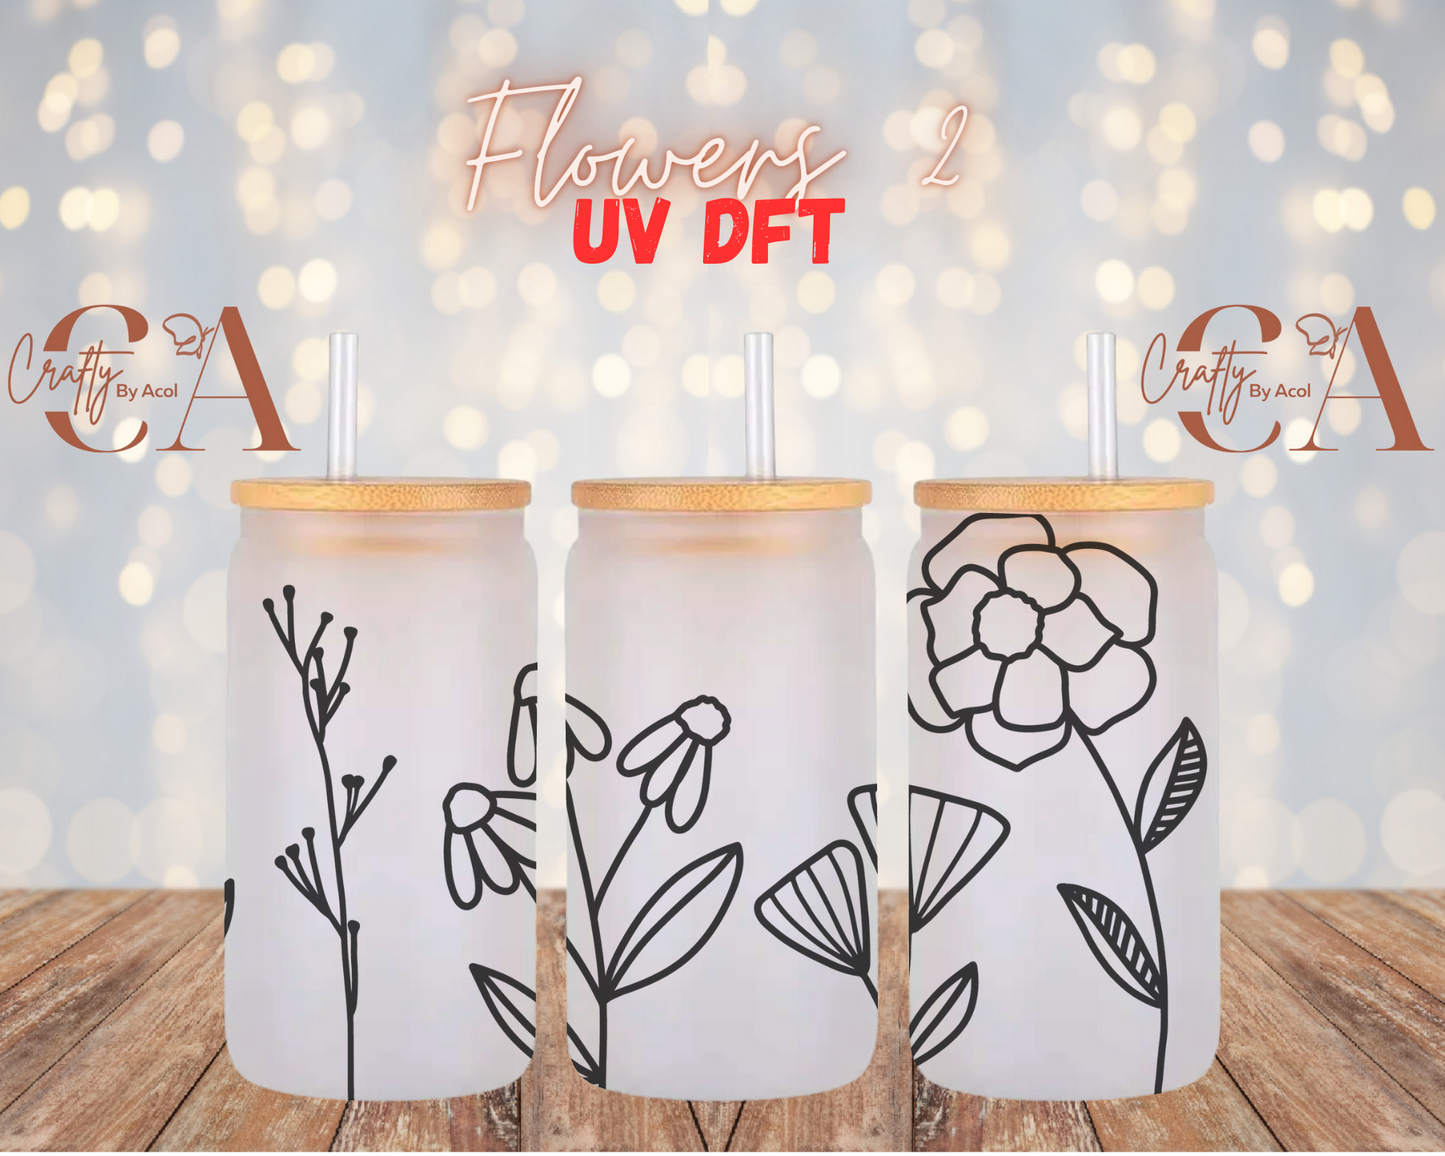 Flowers 2 UV DFT Cup Wrap